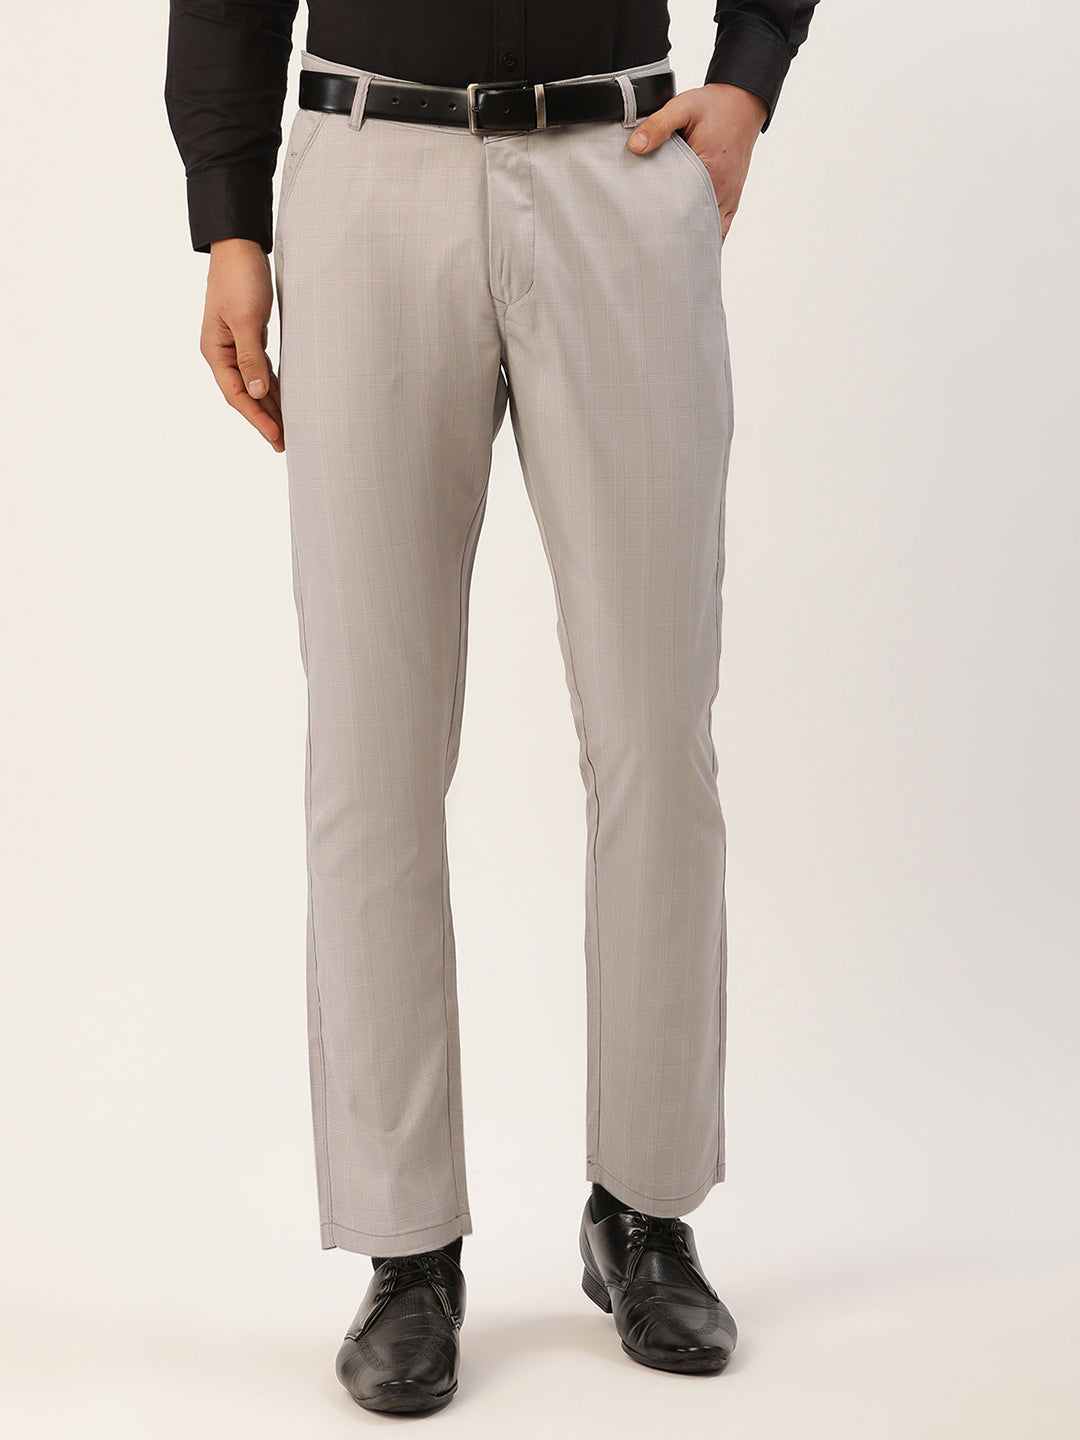 Men's Grey Checked Formal Trousers ( FGP 270 Grey ) - Jainish